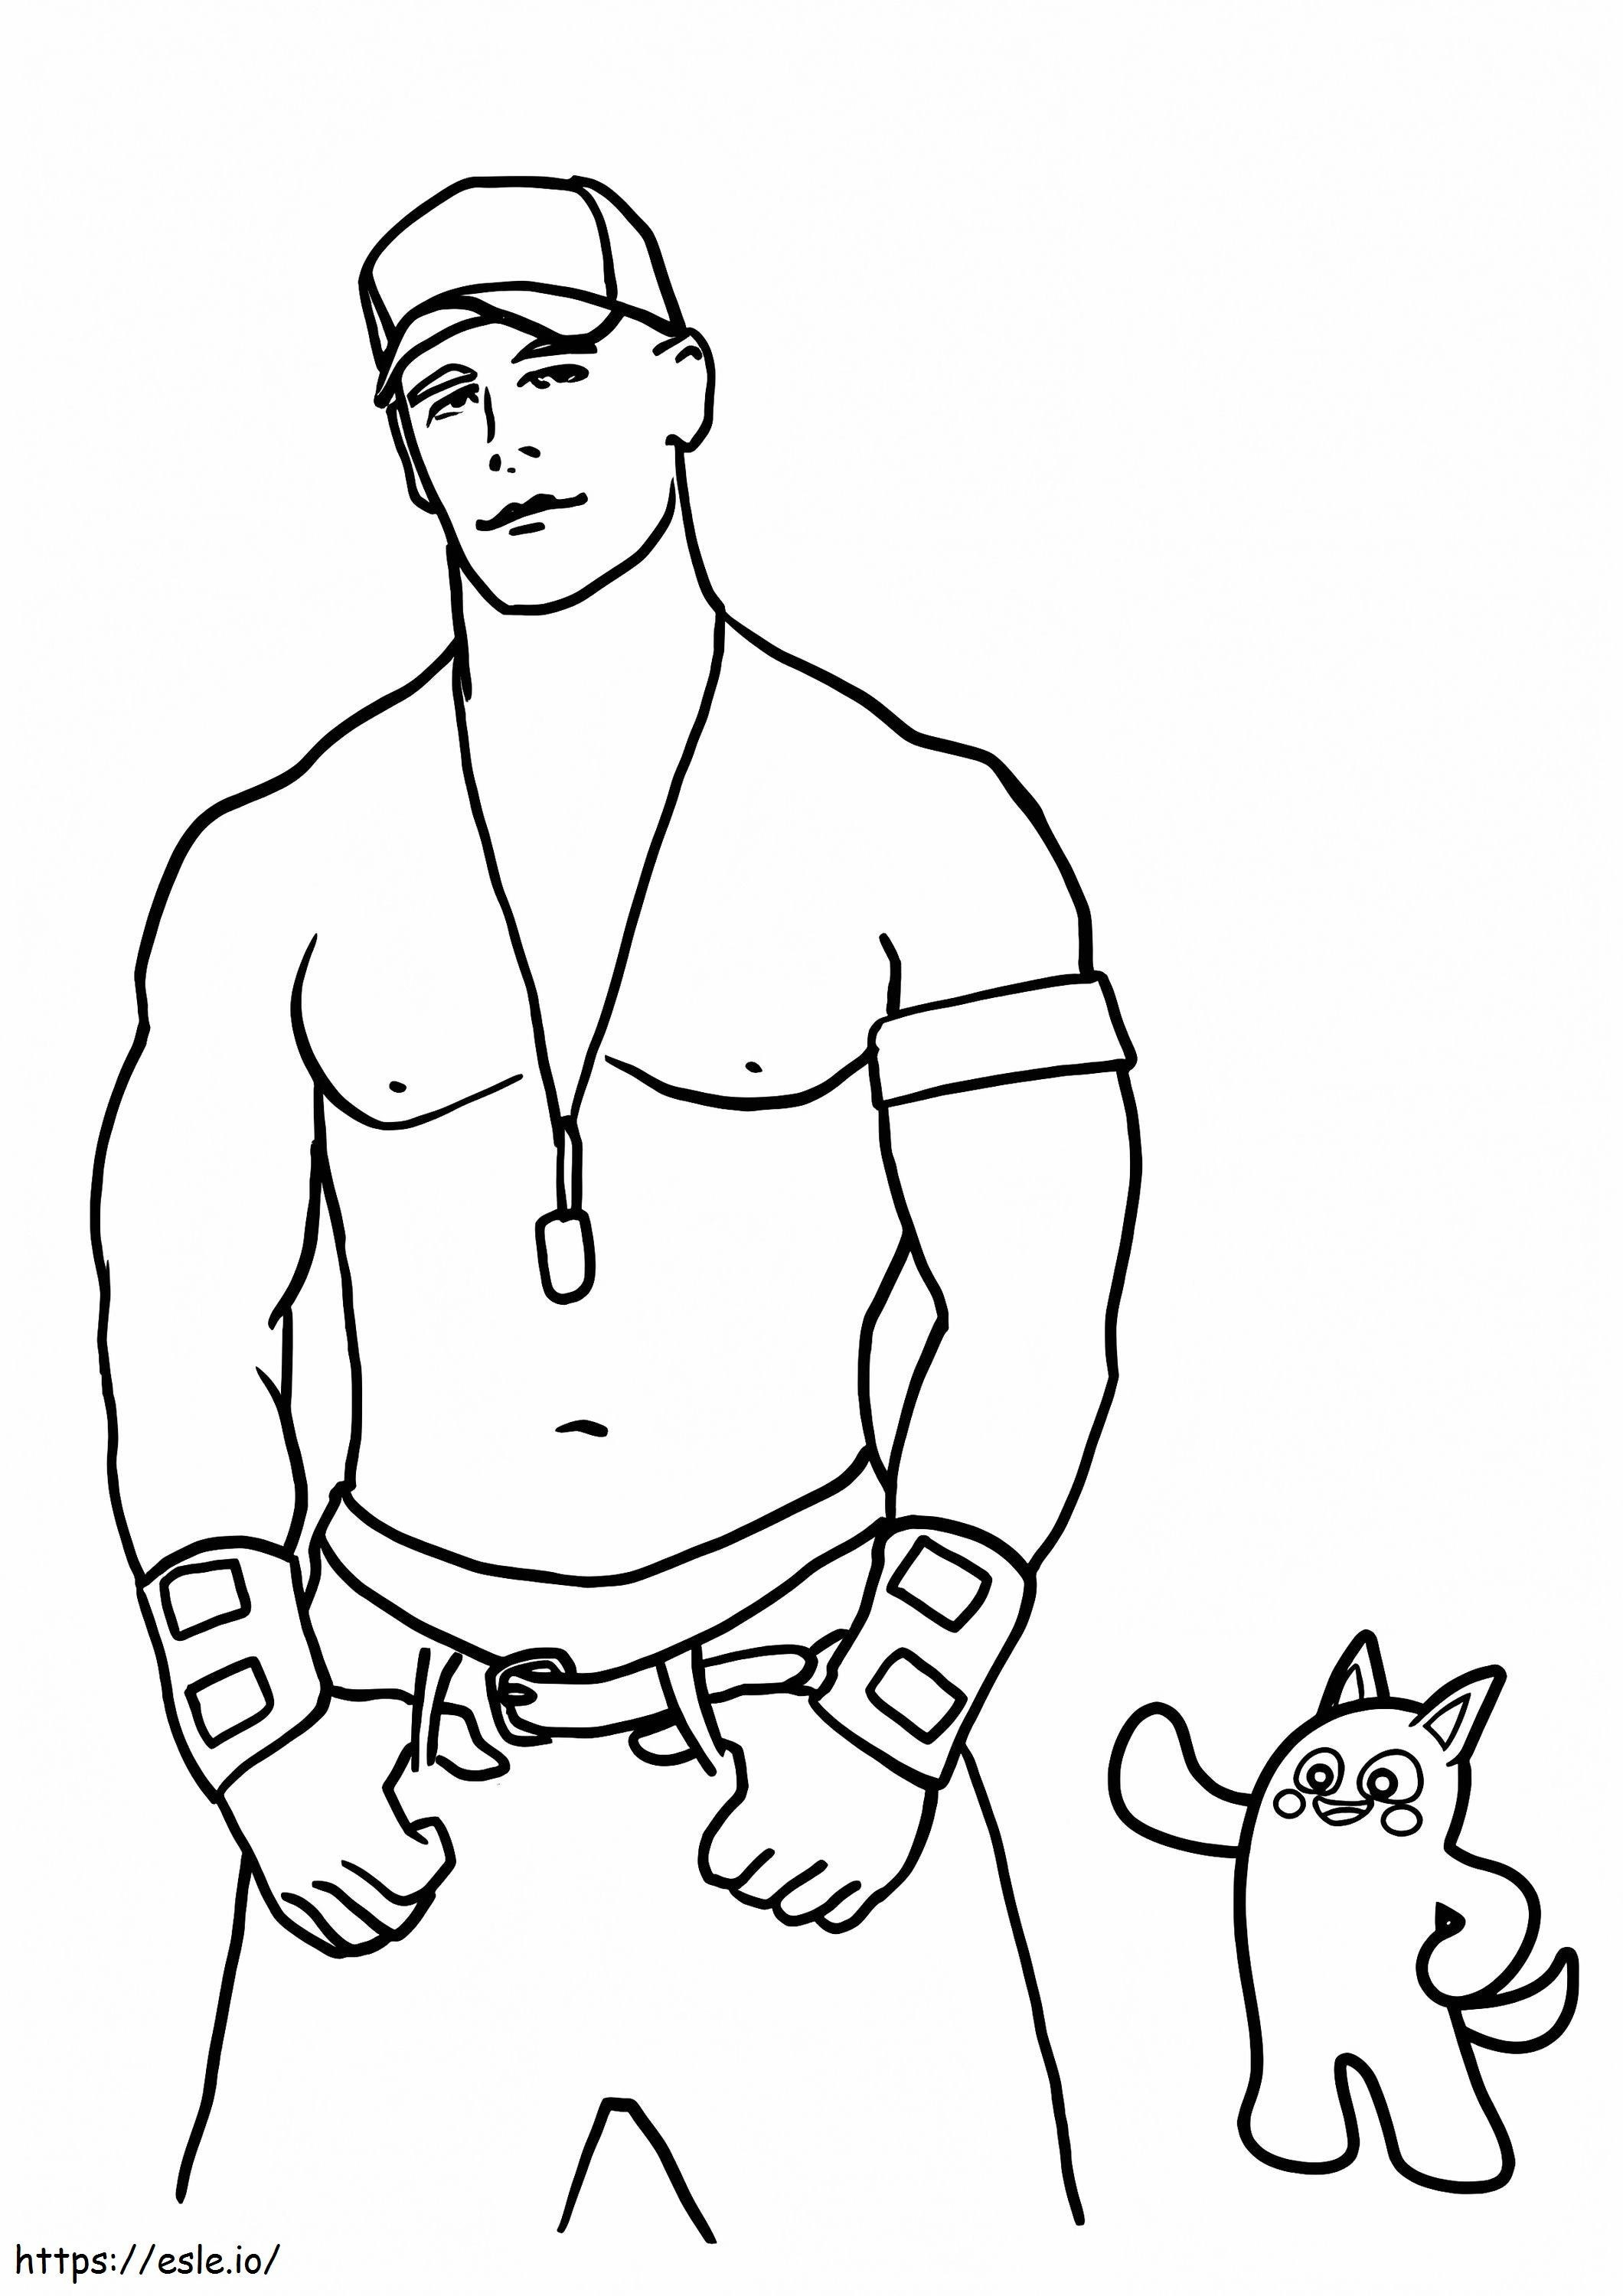 Free John Cena coloring page